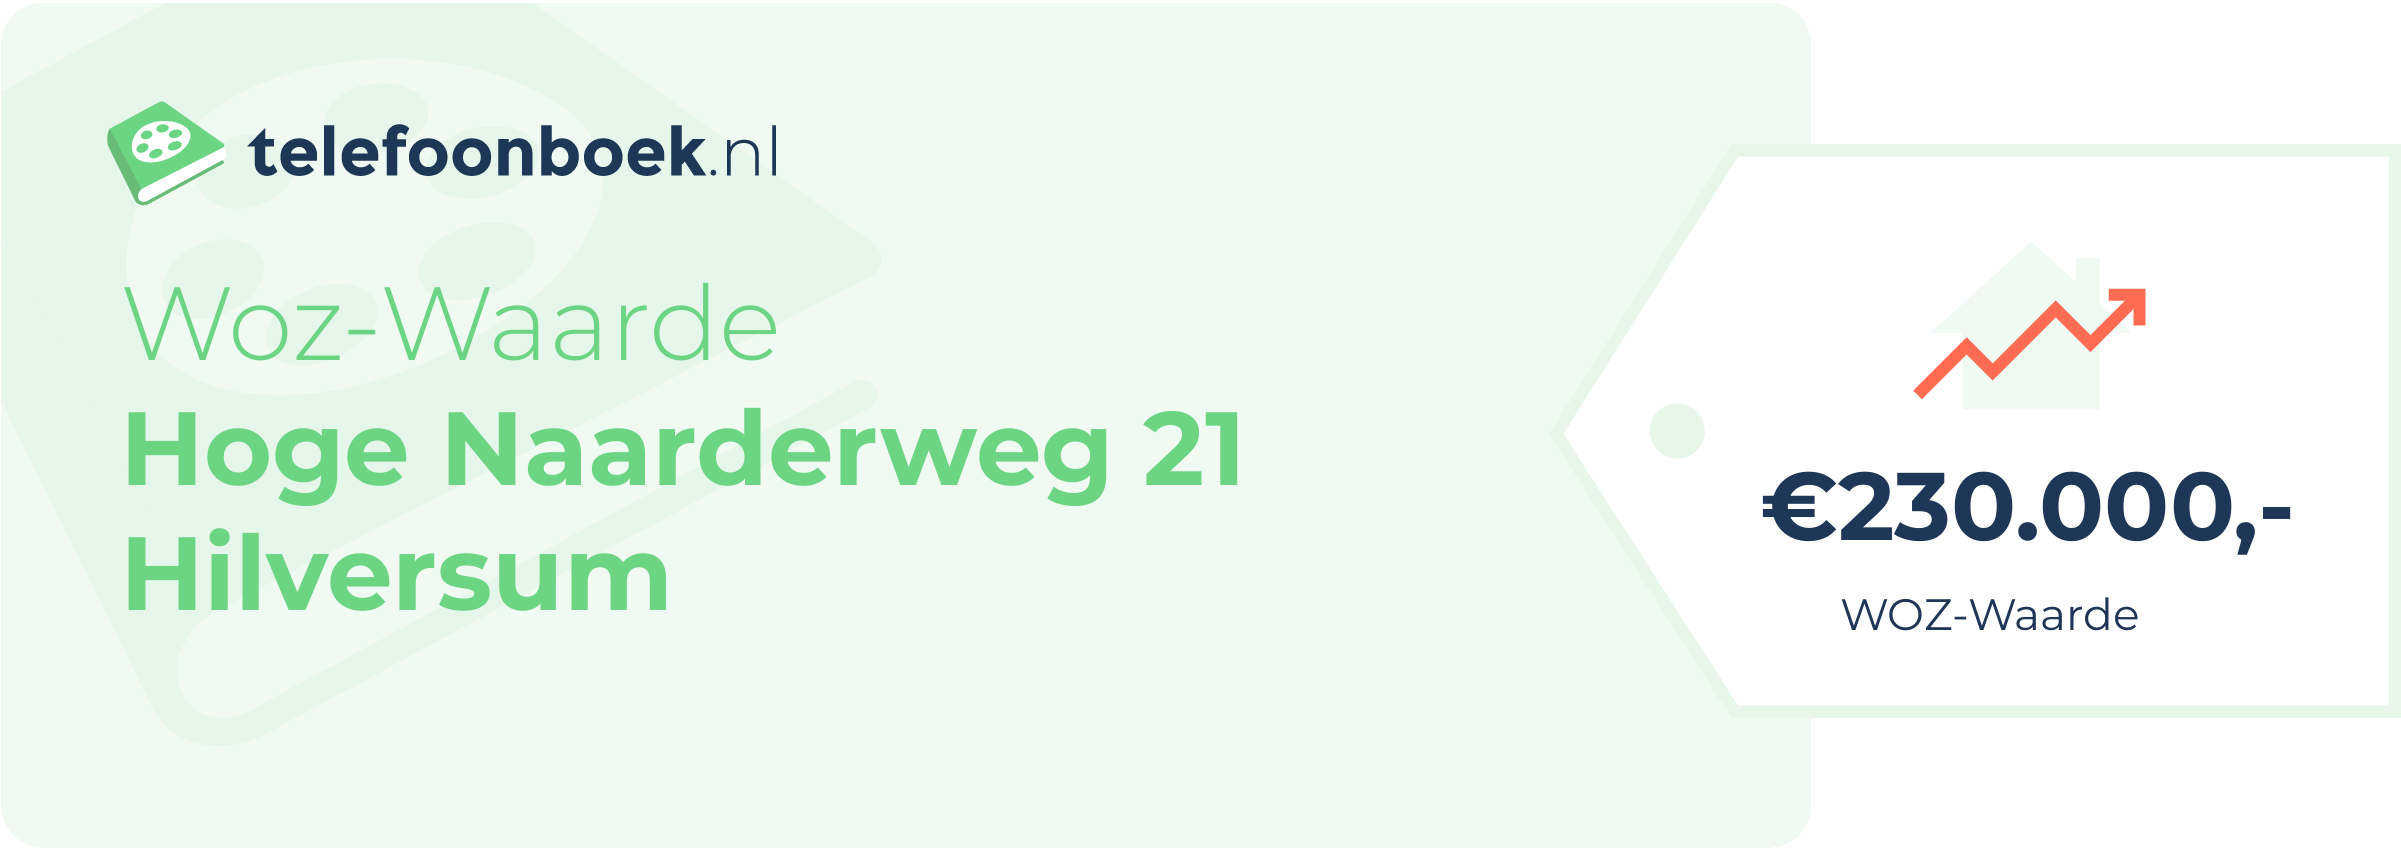 WOZ-waarde Hoge Naarderweg 21 Hilversum